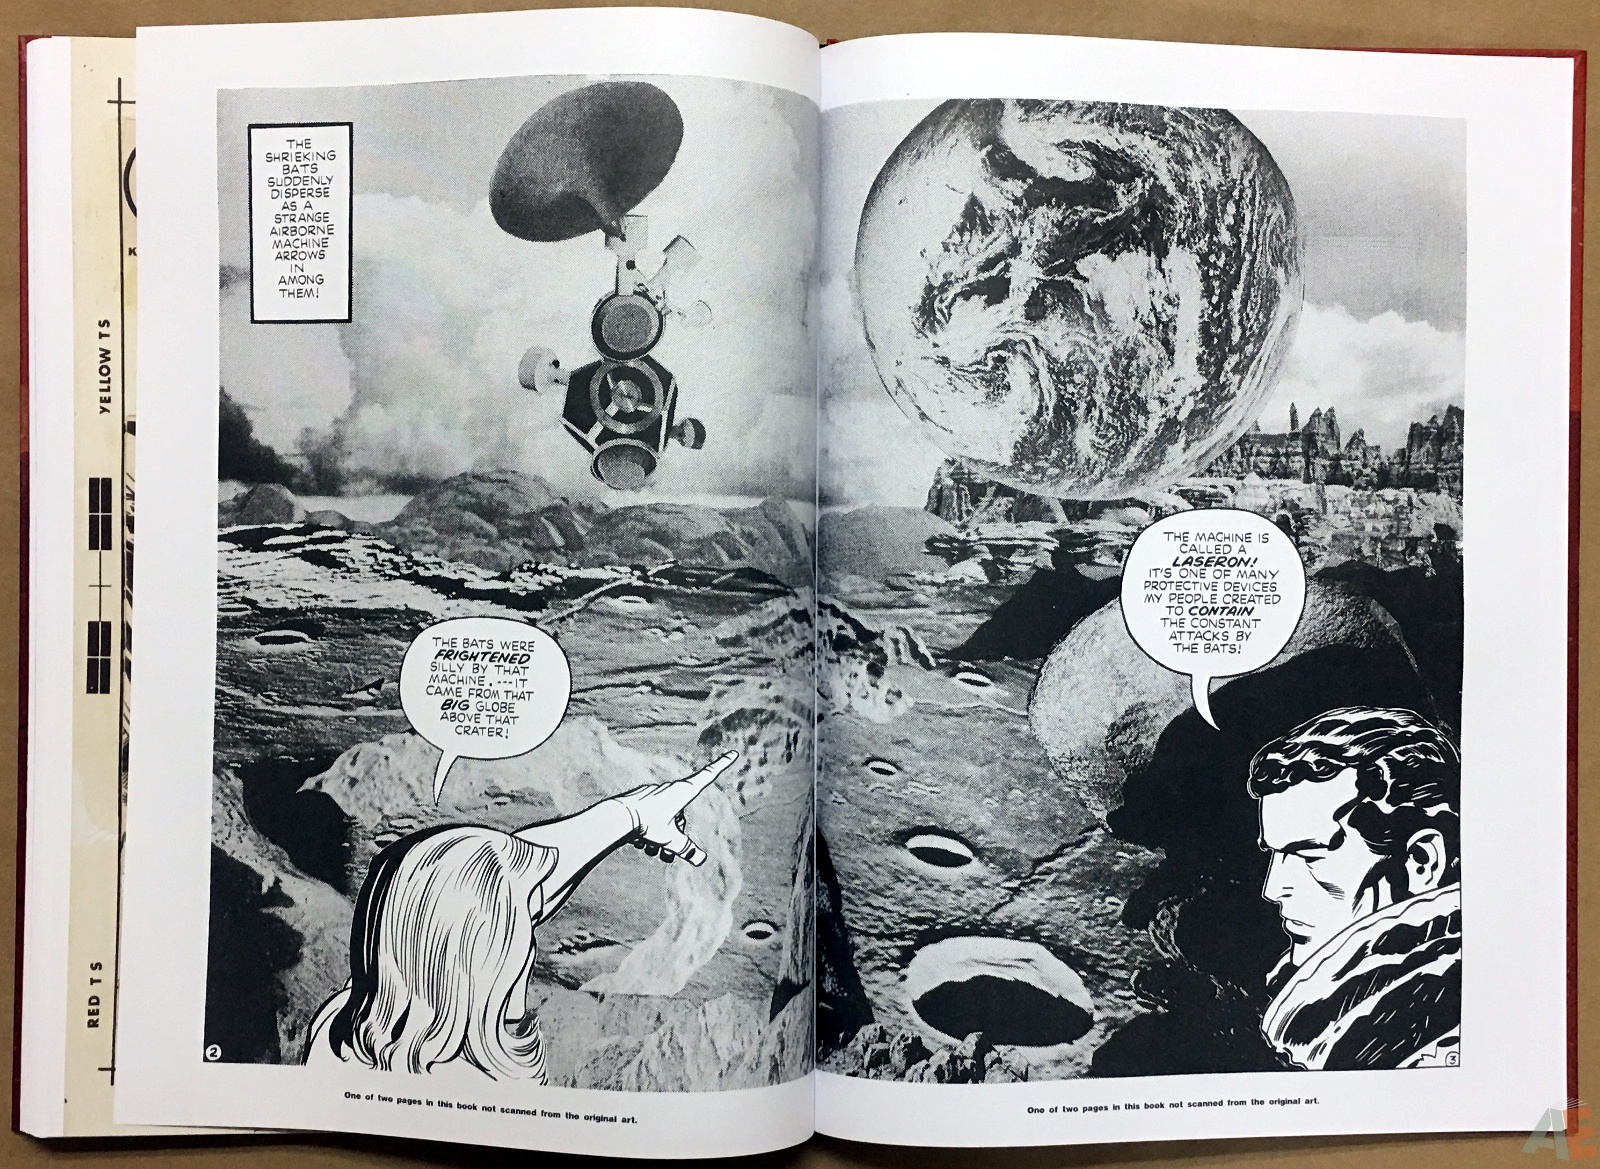 Jack Kirby Kamandi The Last Boy On Earth Artist’s Edition